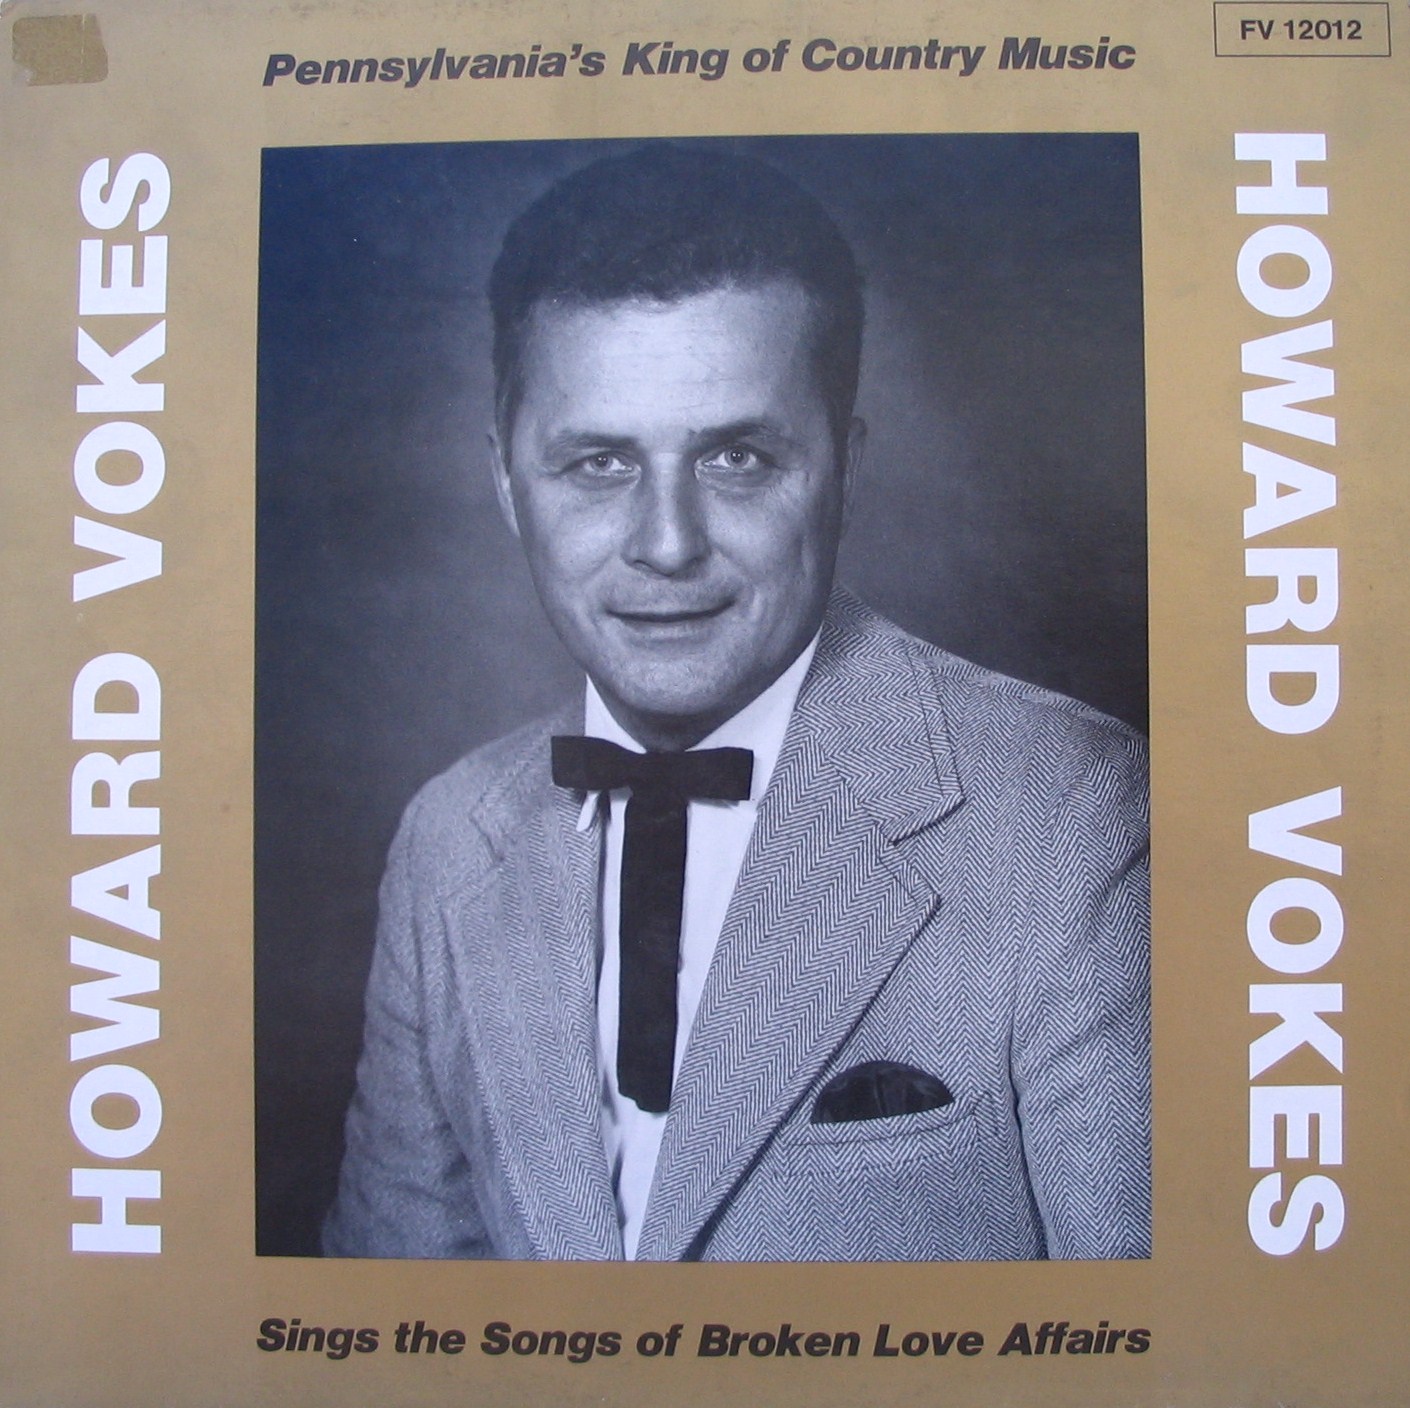 Howard Vokes LP cover